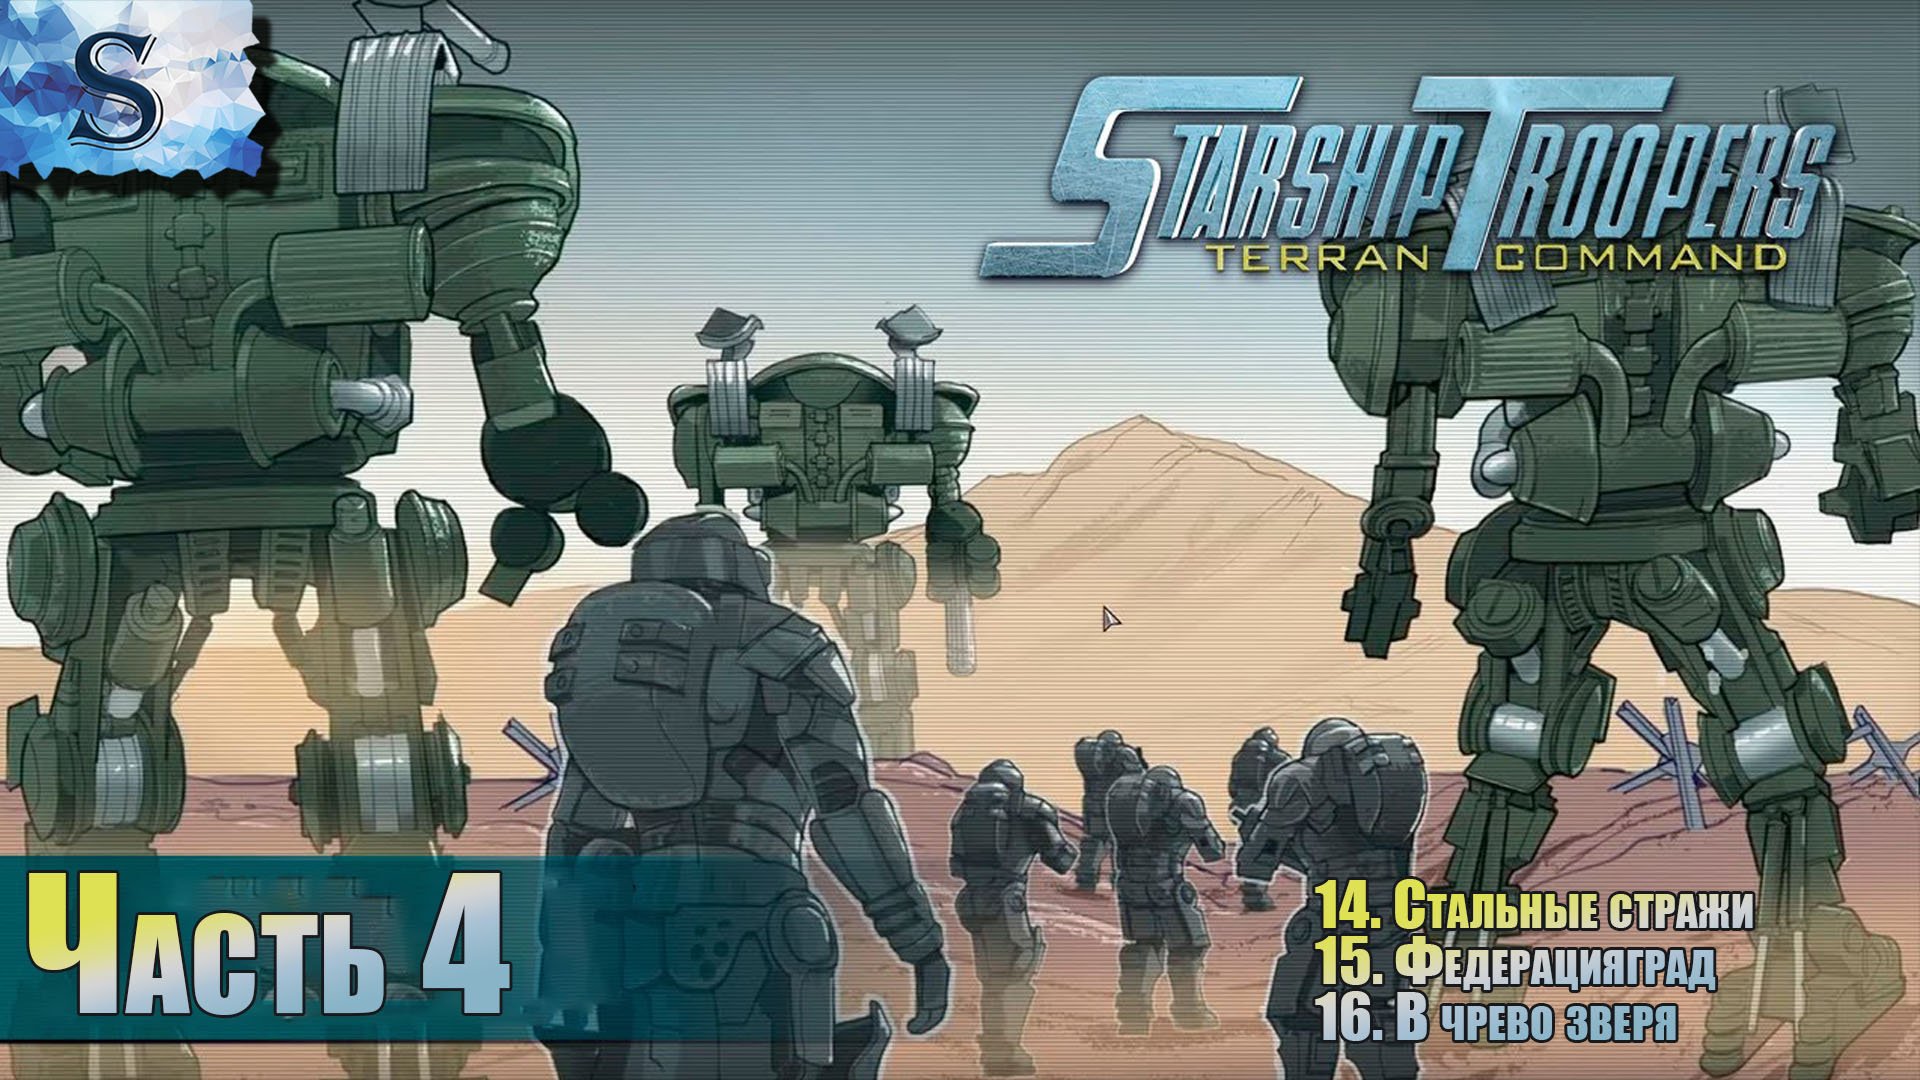 Игры starship troopers terran command. Starship Troopers игра 2022. Starship Troopers: Terran Command. Starship Troopers 2020 игра. Звездный десант стратегия 2022.